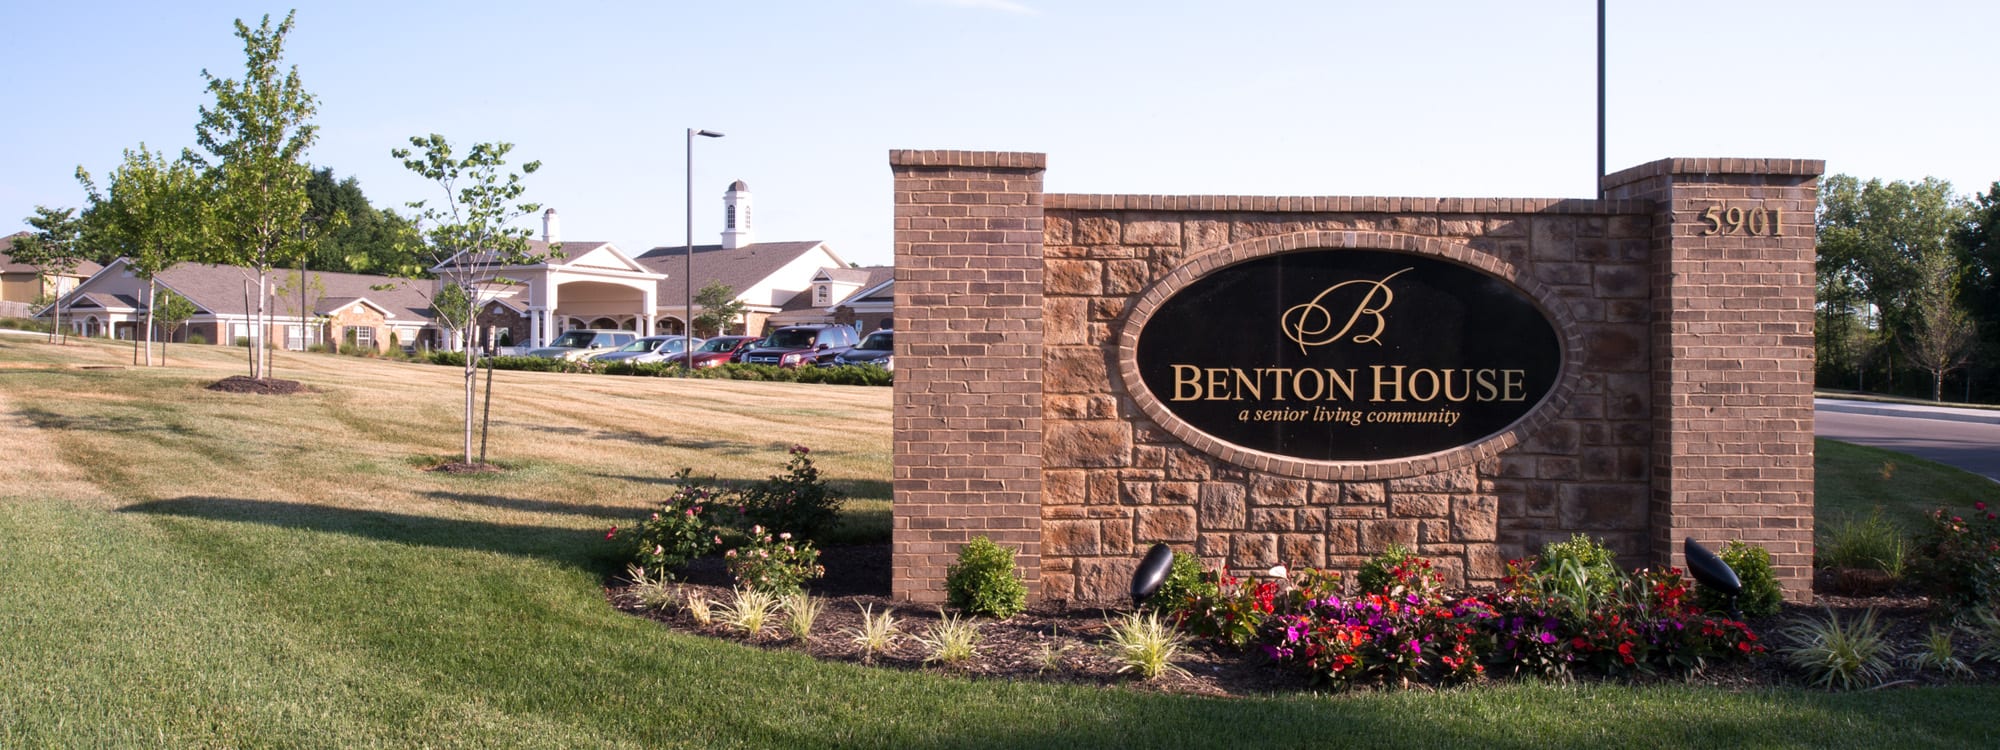 Hunt Midwest Senior Housing Development - Benton House